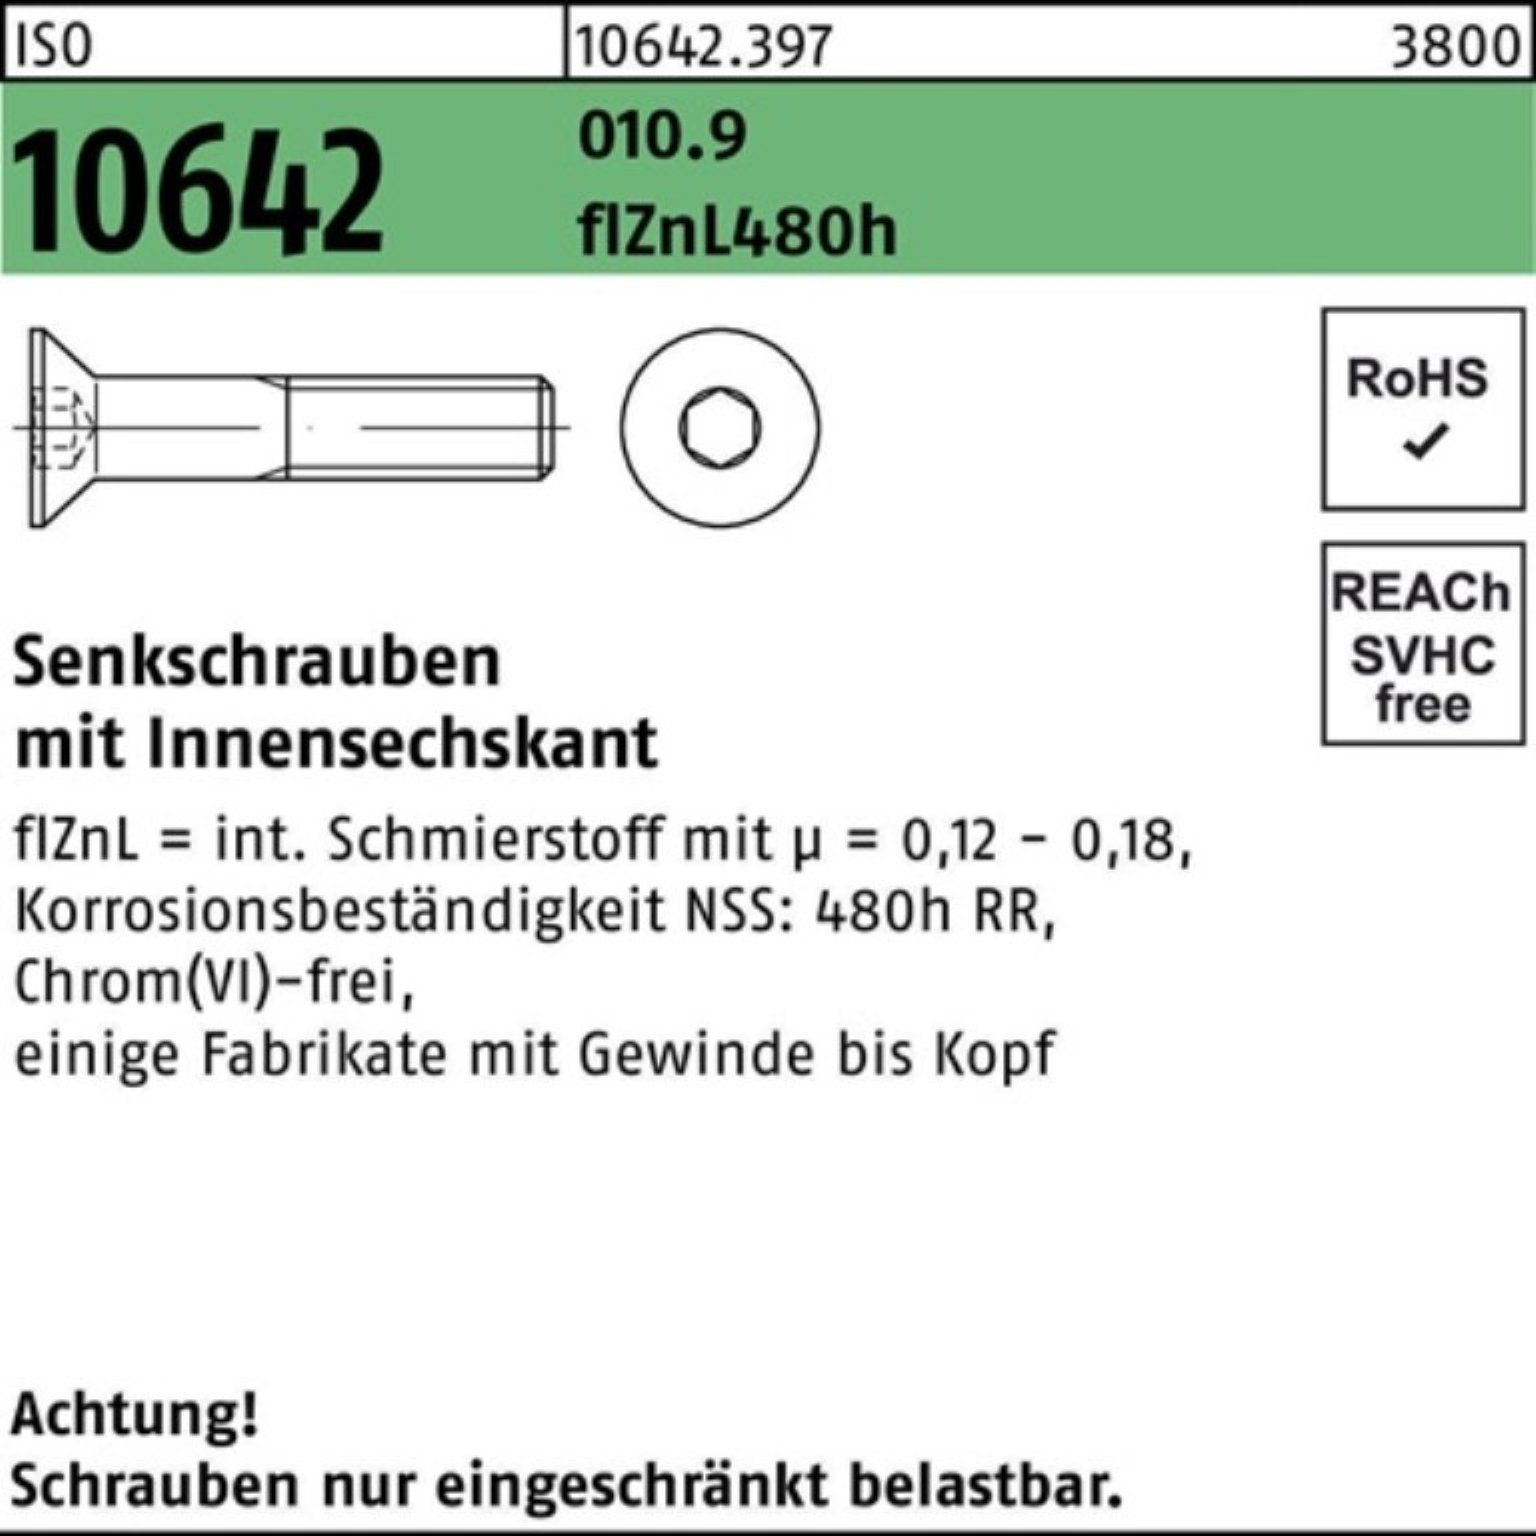 Reyher Senkschraube 200er Pack Senkschraube ISO 10642 Innen-6kt M10x20 010.9 flZnL 480h zi | Schrauben